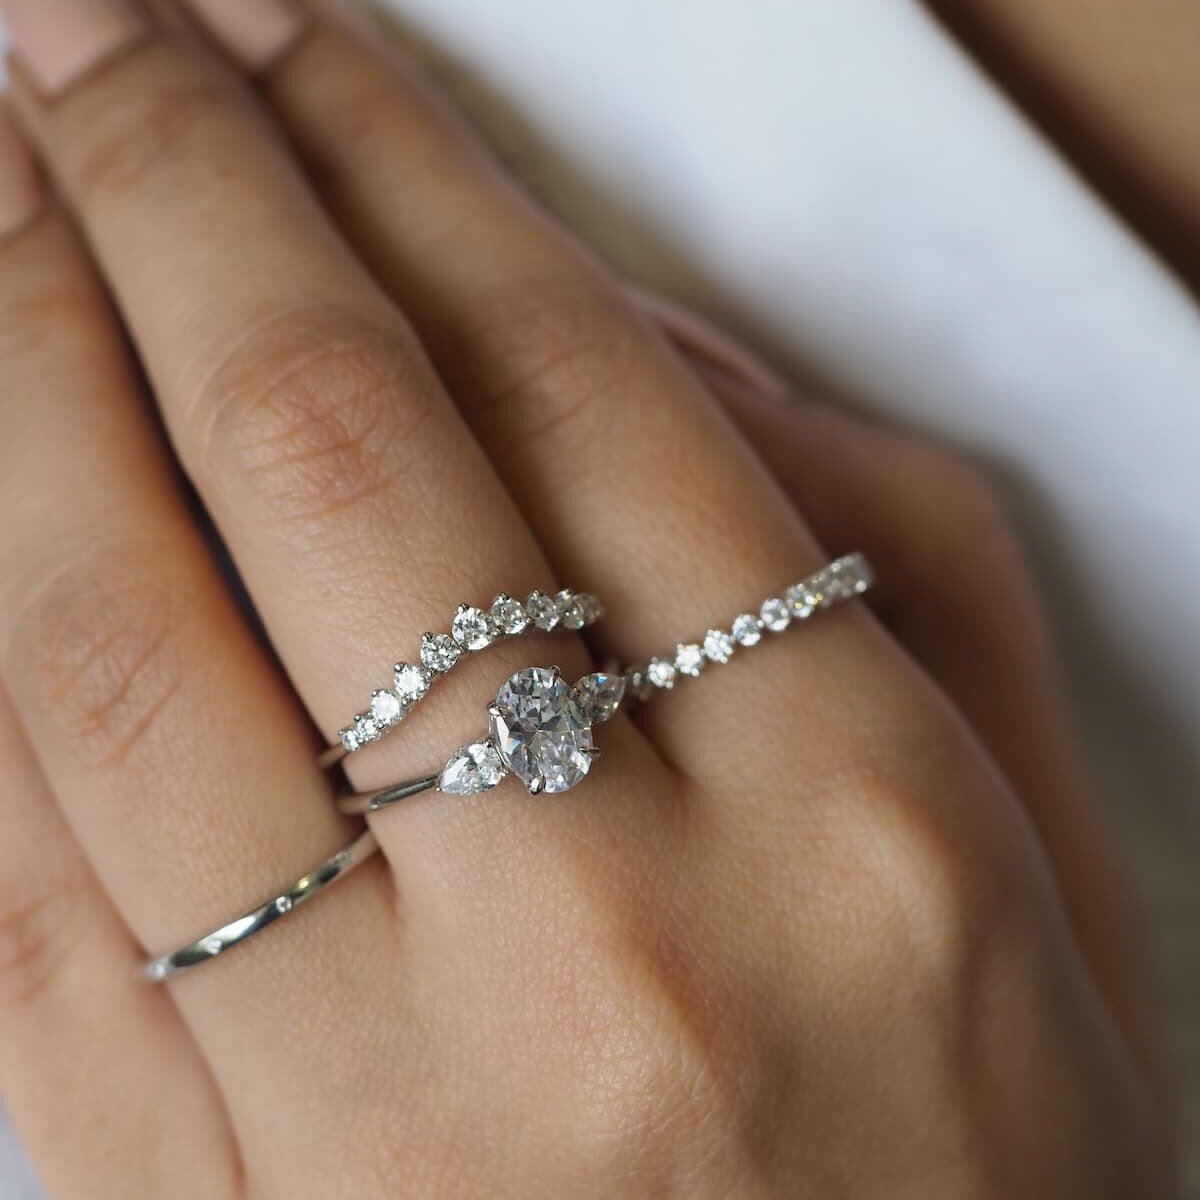 Lisa Diamond ring with wedding bands